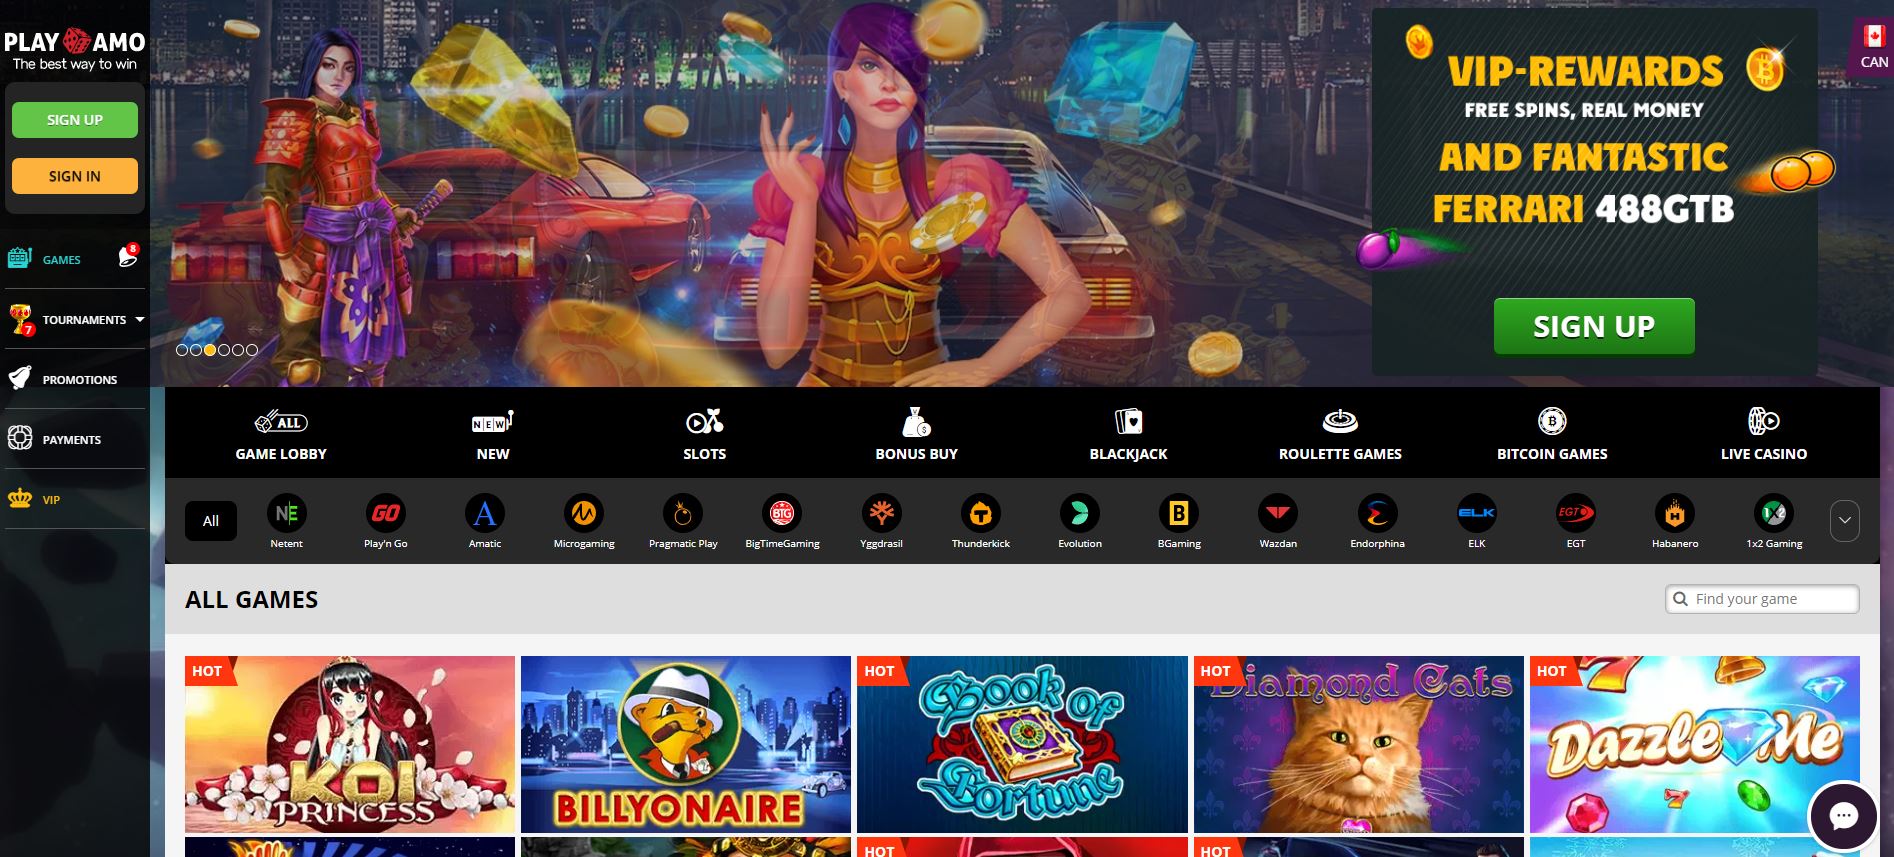 PlayAmo casino games section.